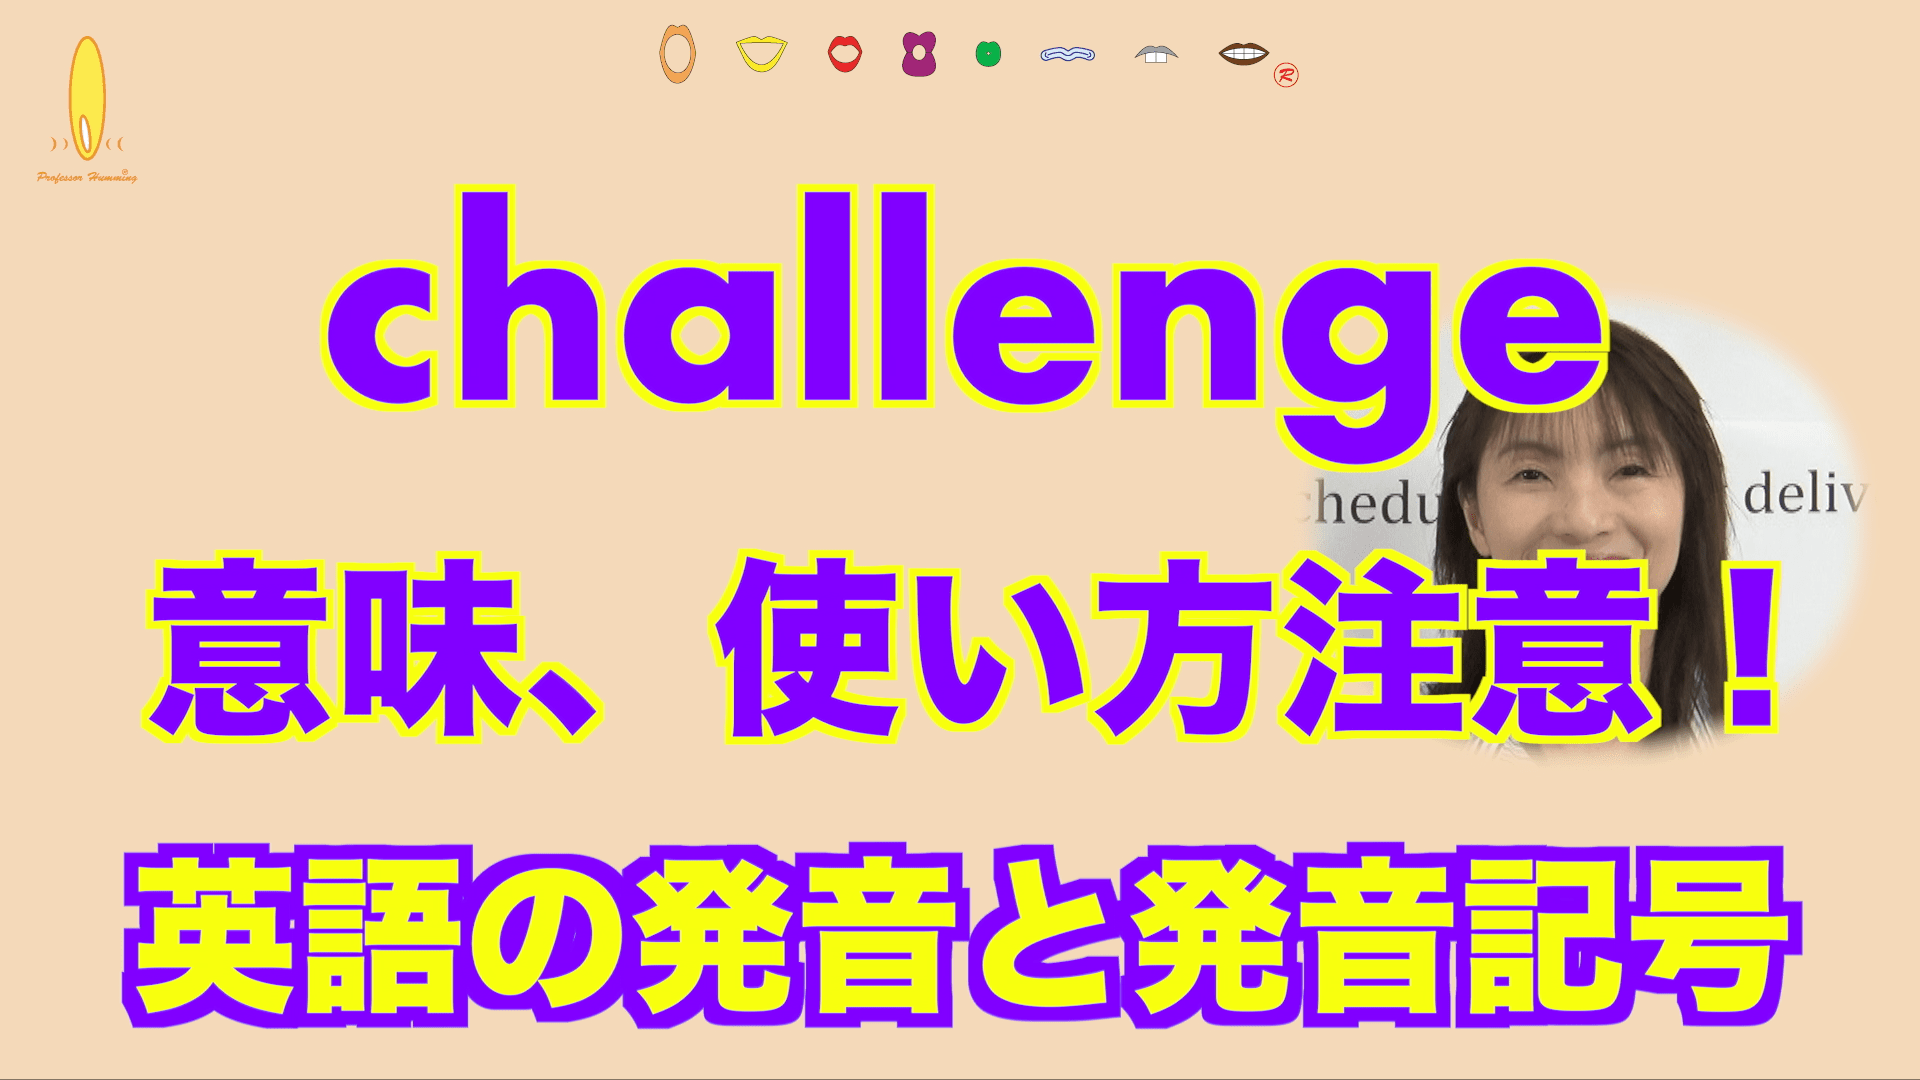 Challengeの使い方要注意 Challengingの意味 発音 使い方 英語の発音辞書辞典 発音記号を勉強しよう